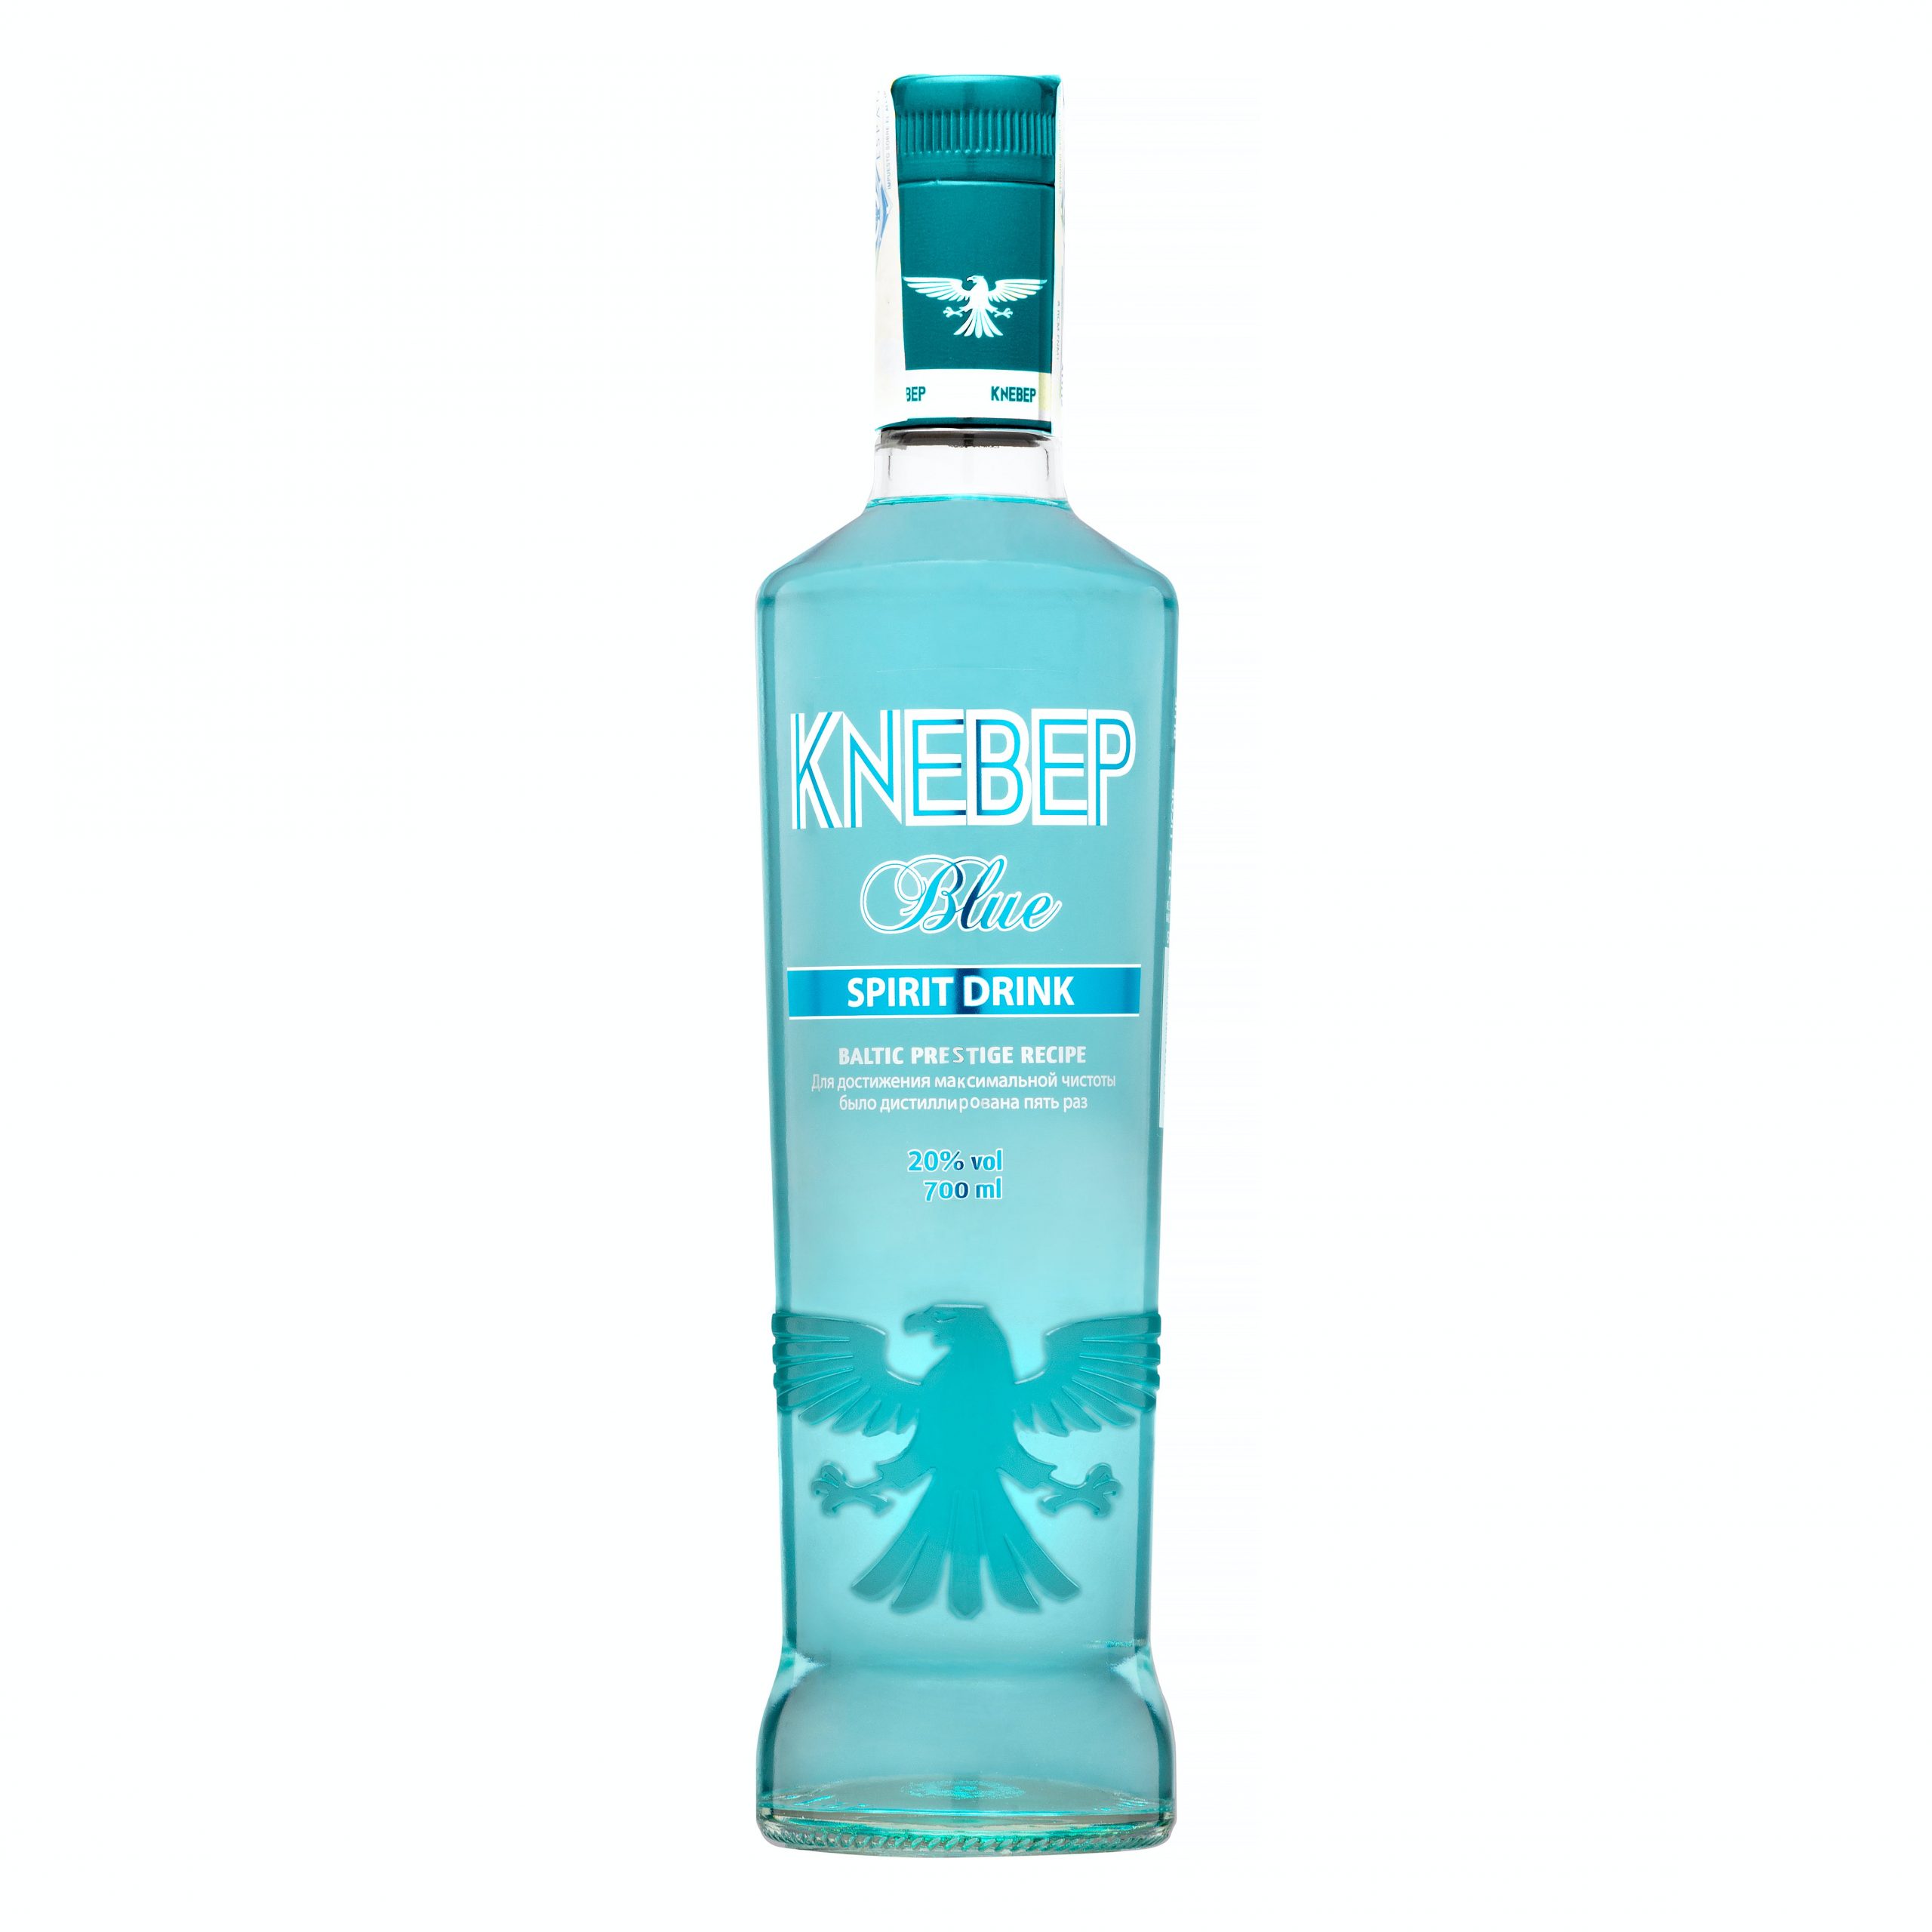 Vodka Azul Mercadona